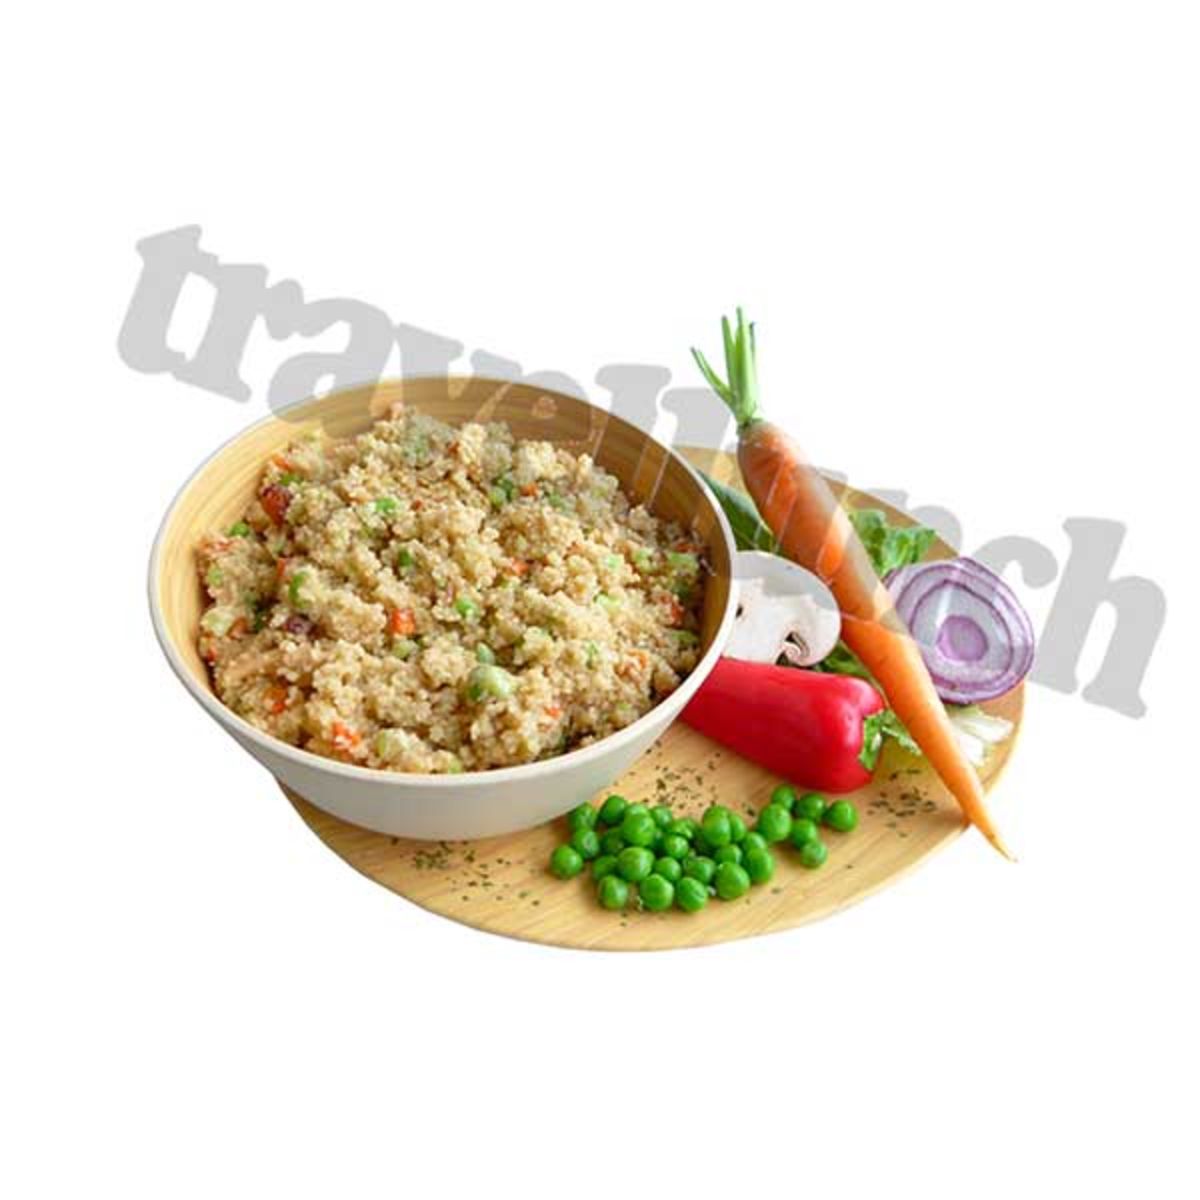 Couscous vegetarian